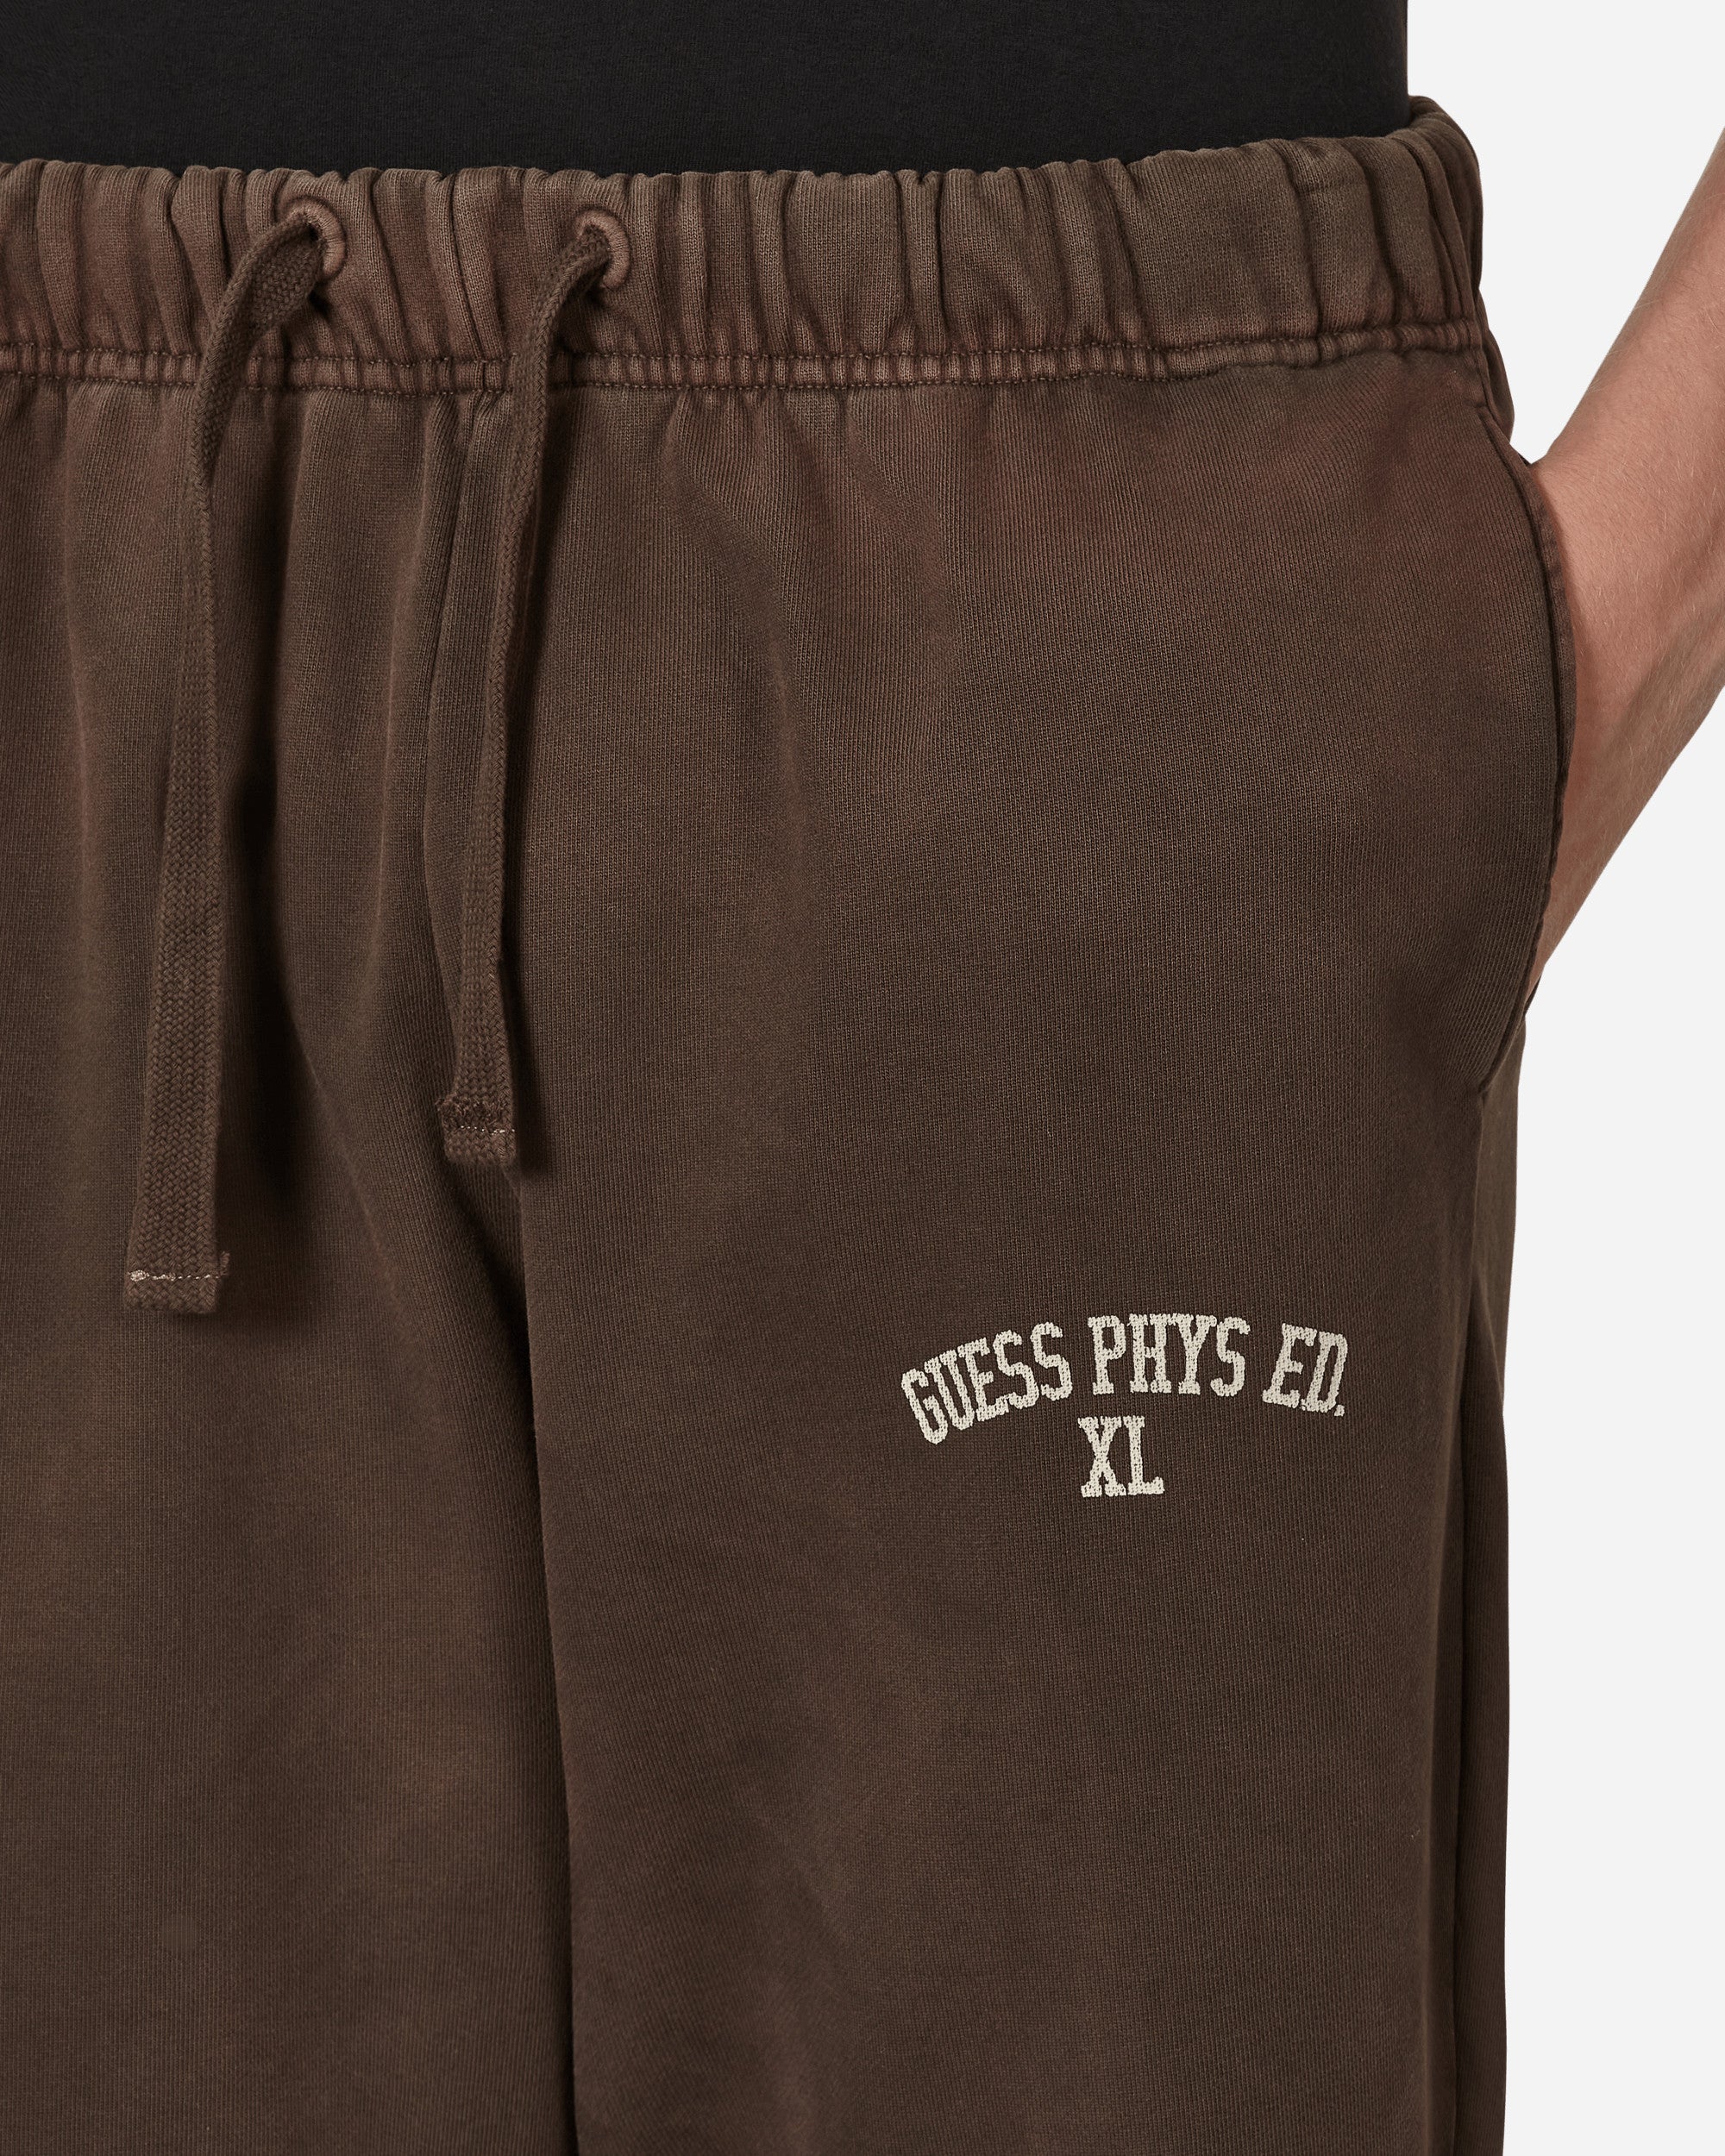 Guess USA Gusa Washed Terry Sweatpant Brown Espresso Pants Trousers M2BQ10KBB40 G1CG